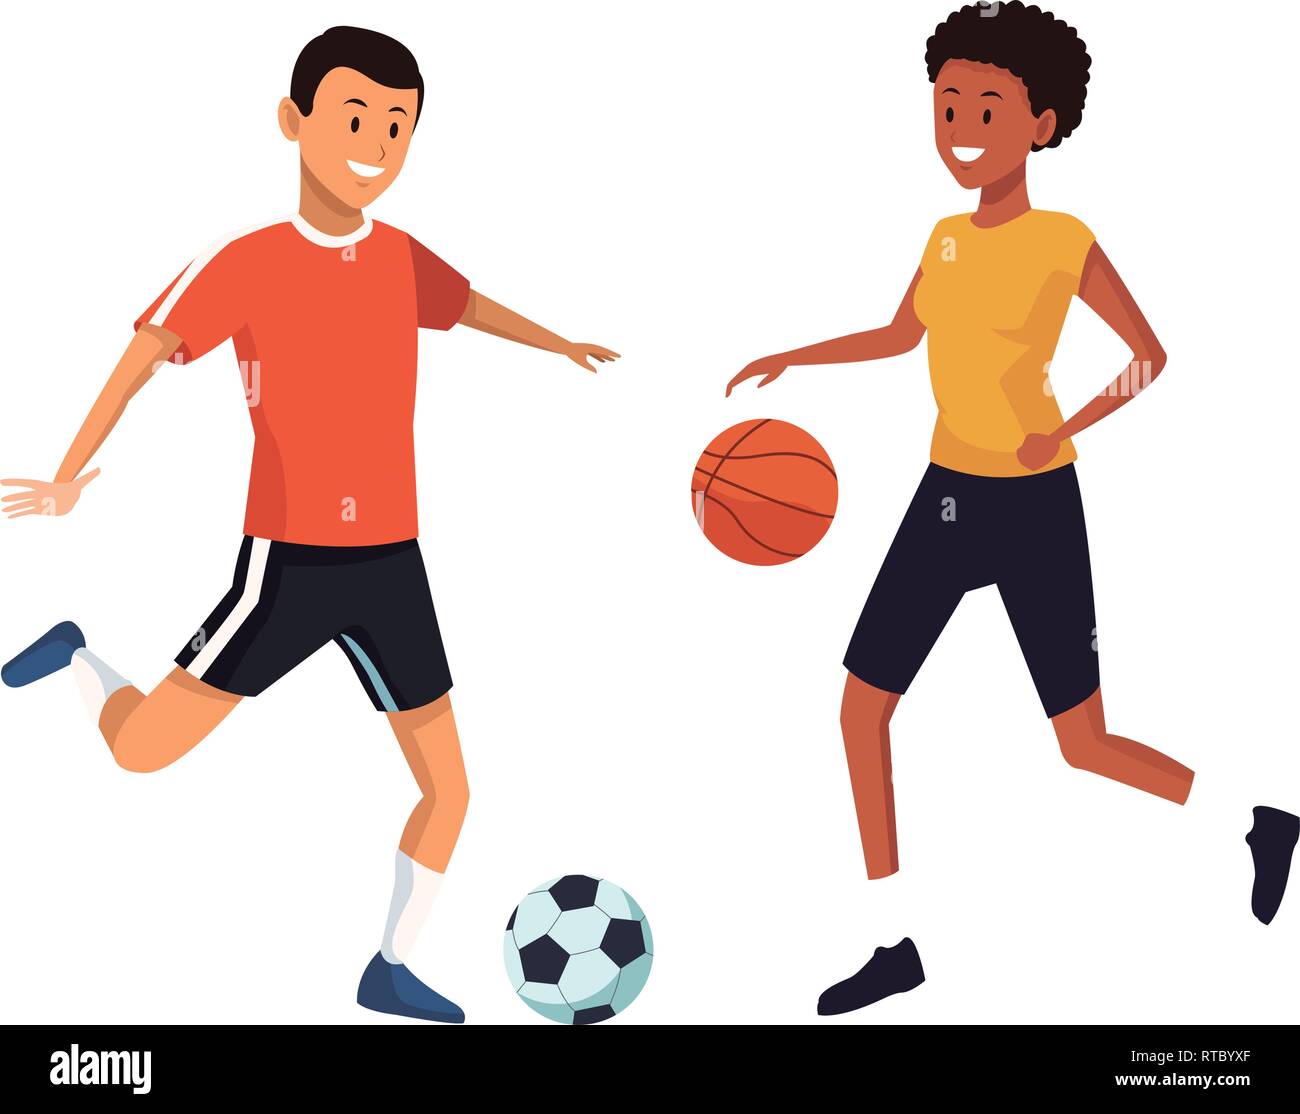 soccer-and-basketball-players-stock-vector-image-art-alamy